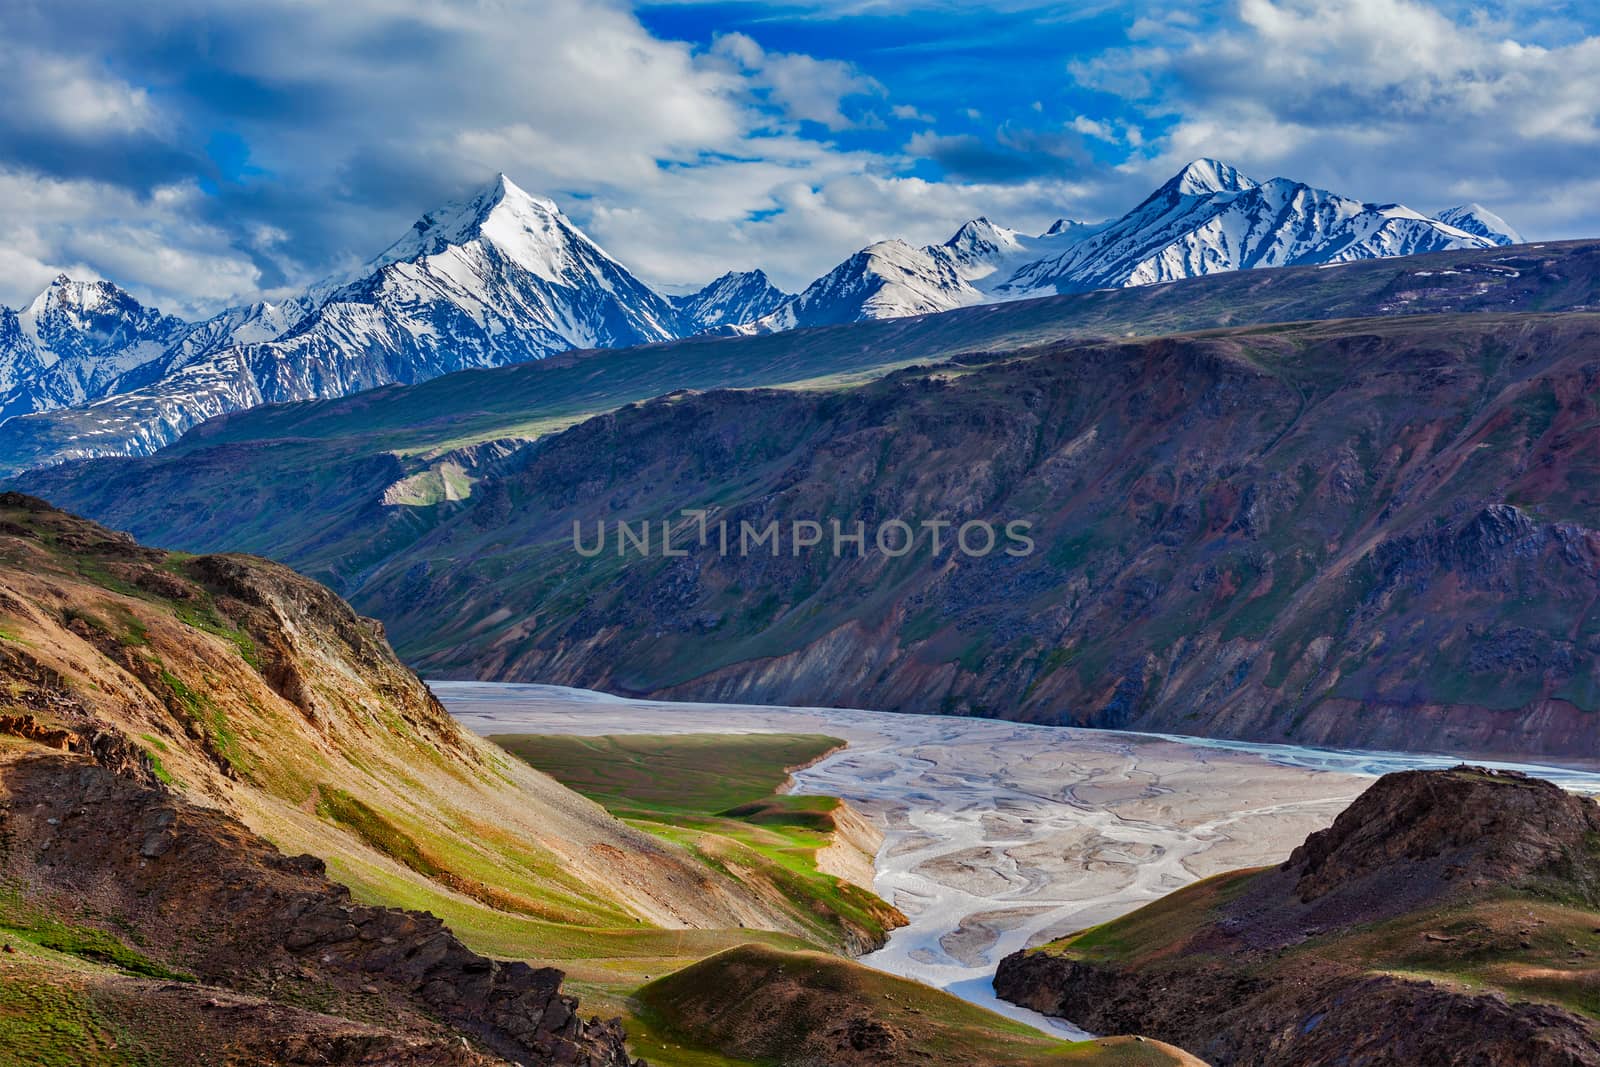 Himalayan landscape near Chandra Tal lake. Spiti Valley, Himachal Pradesh, India